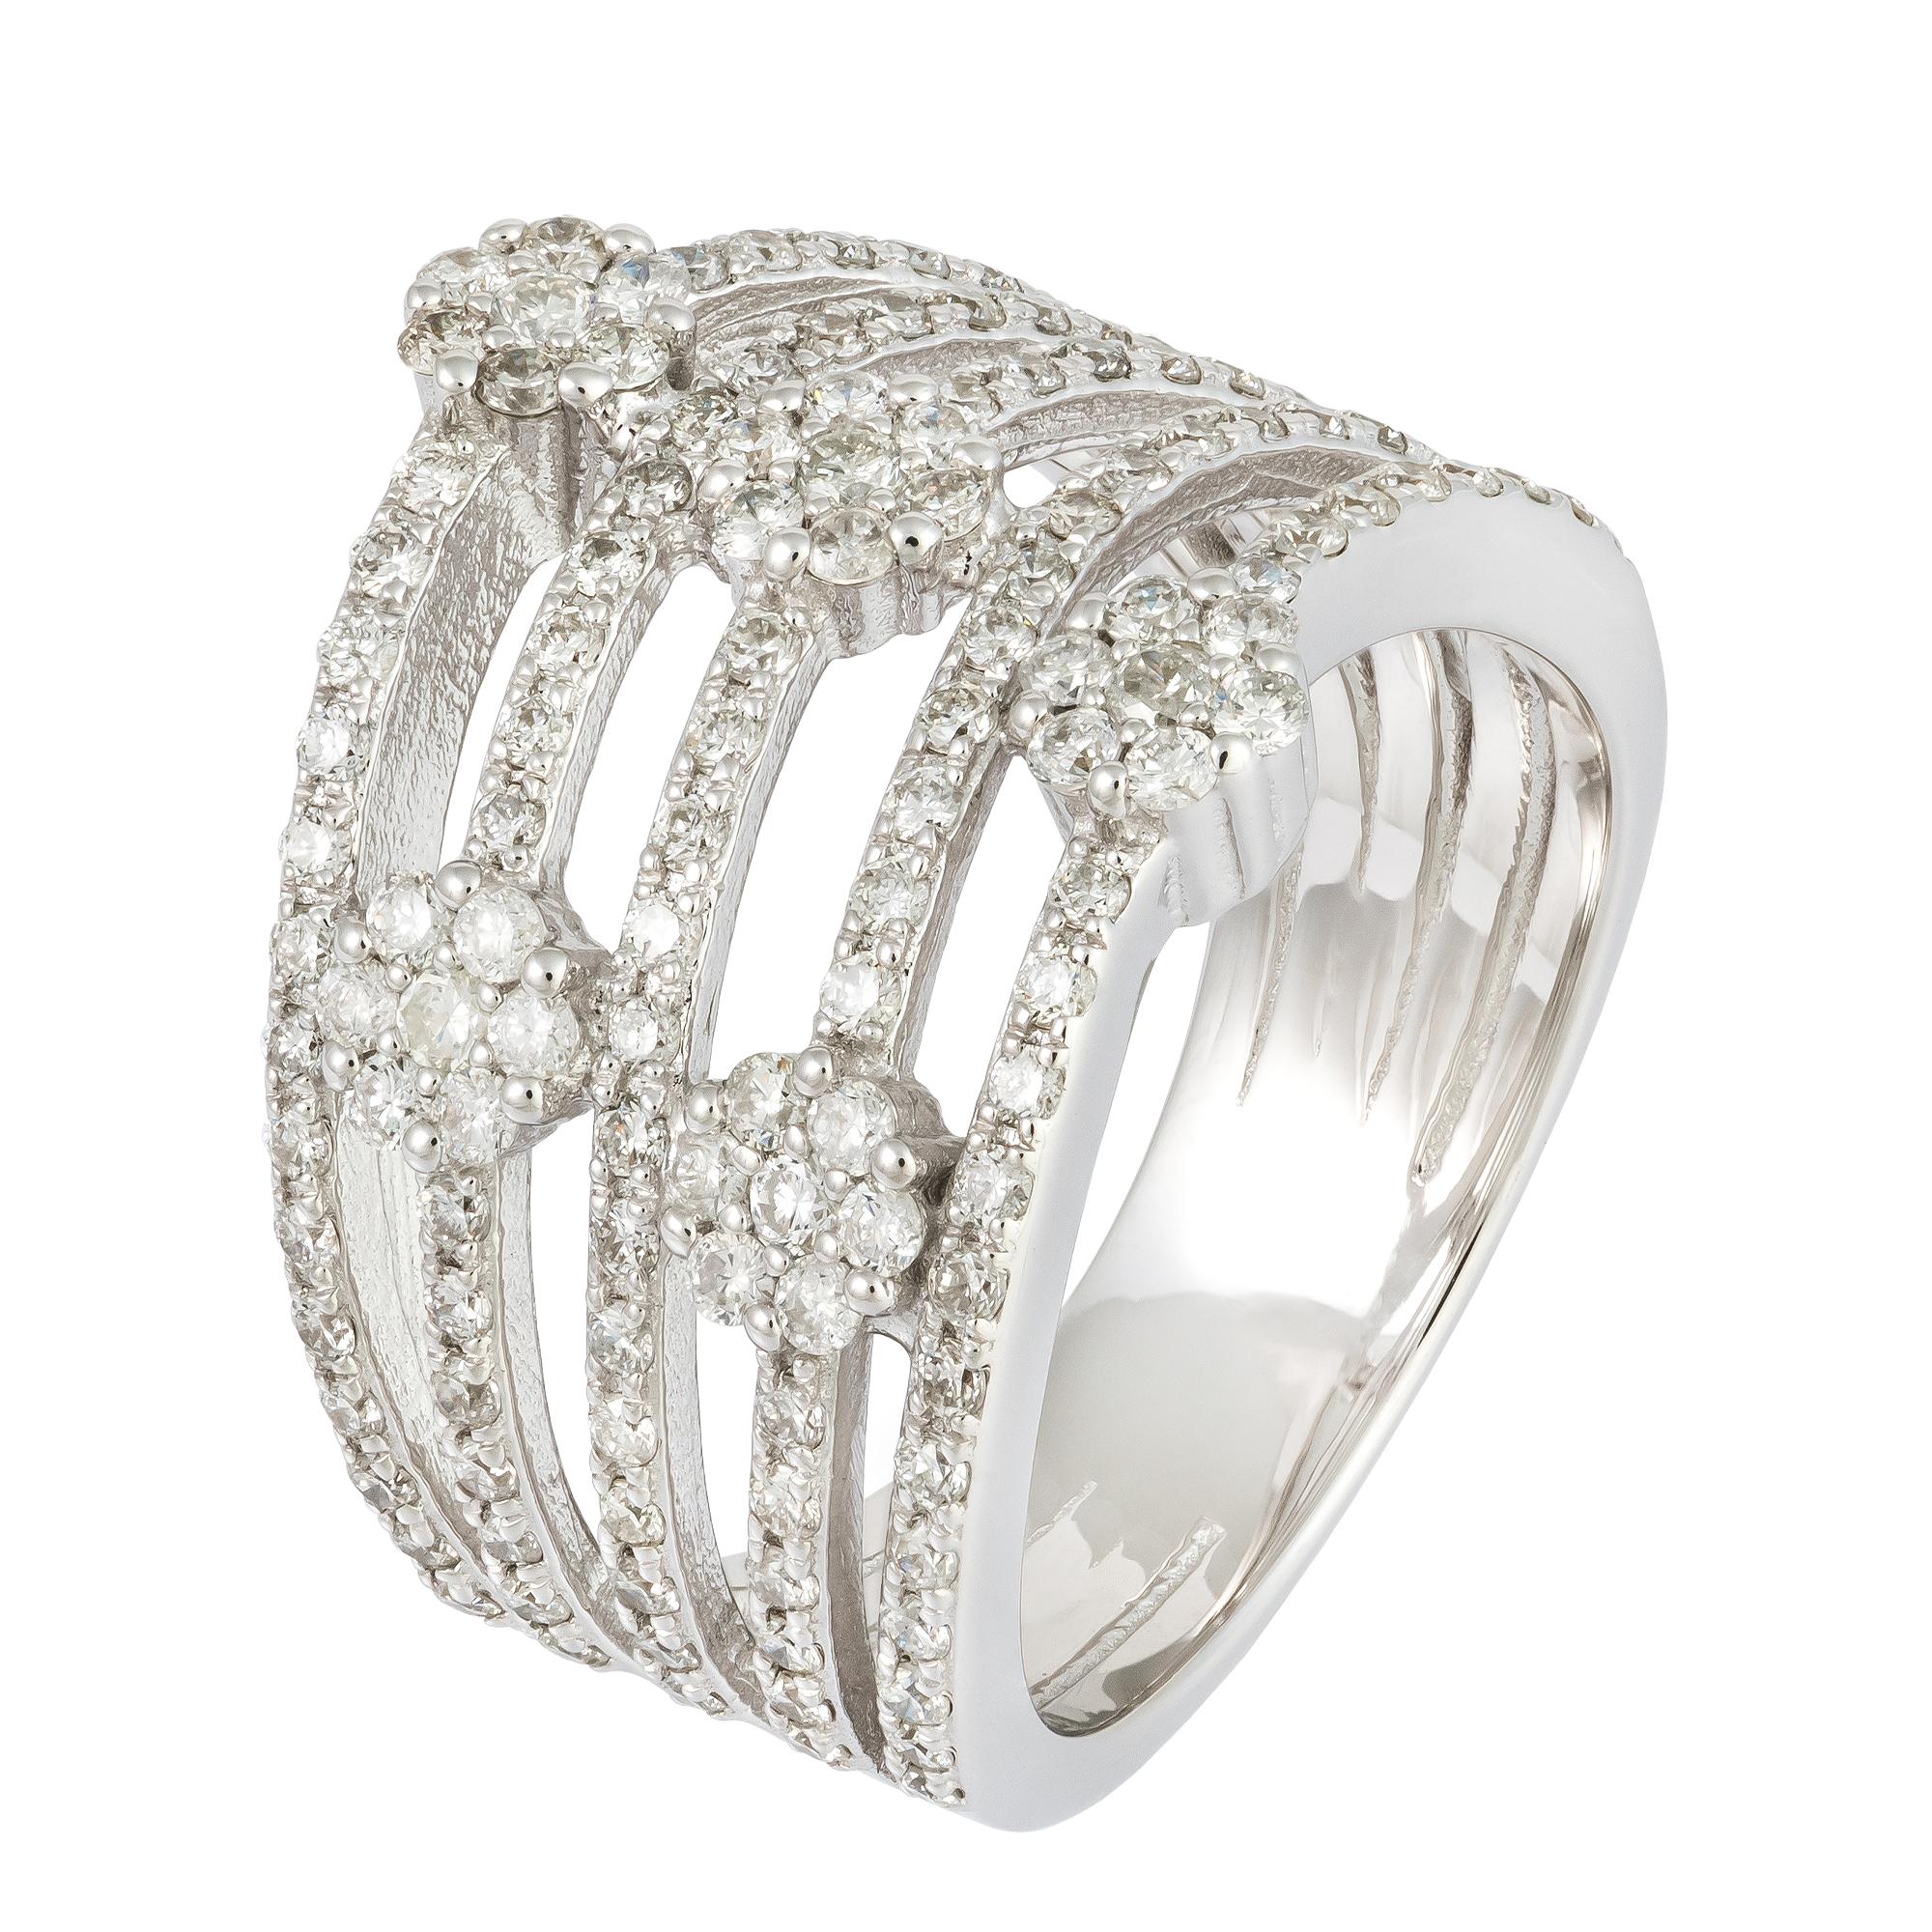 For Sale:  Spectacular White 18K Gold White Diamond Ring For Her 4